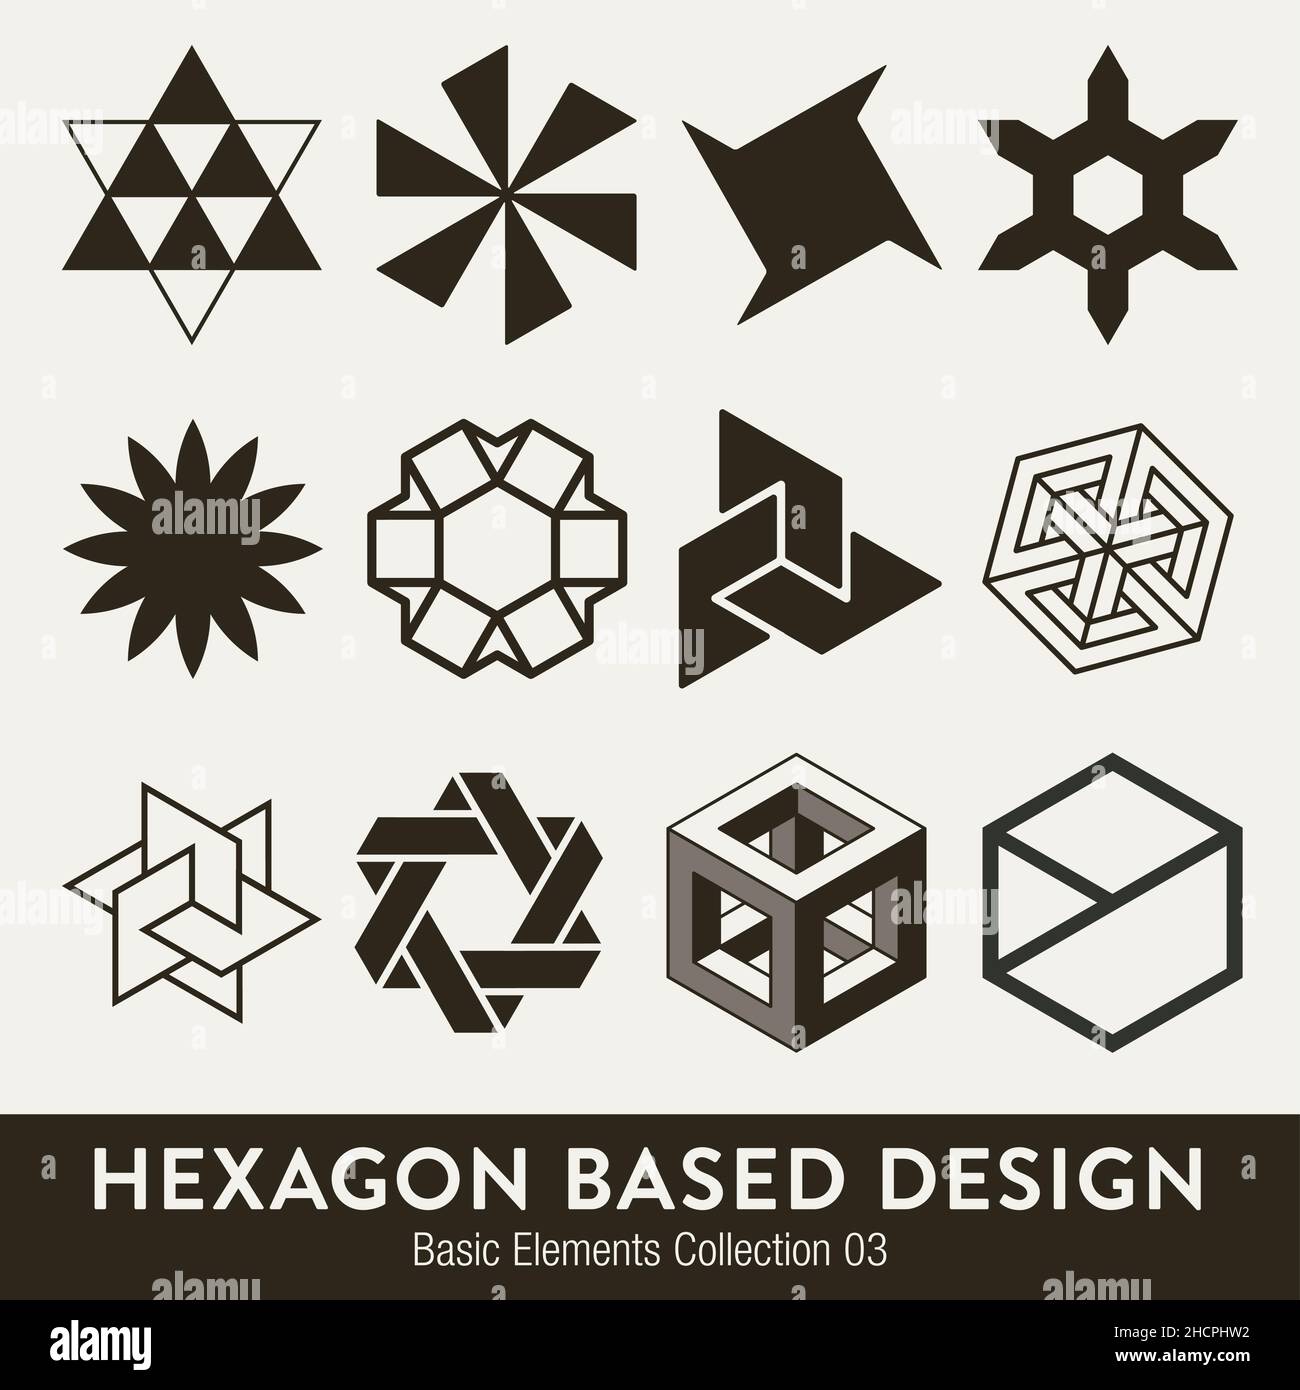 Vector basic element collection: Hexagon based design elements Stock Vector